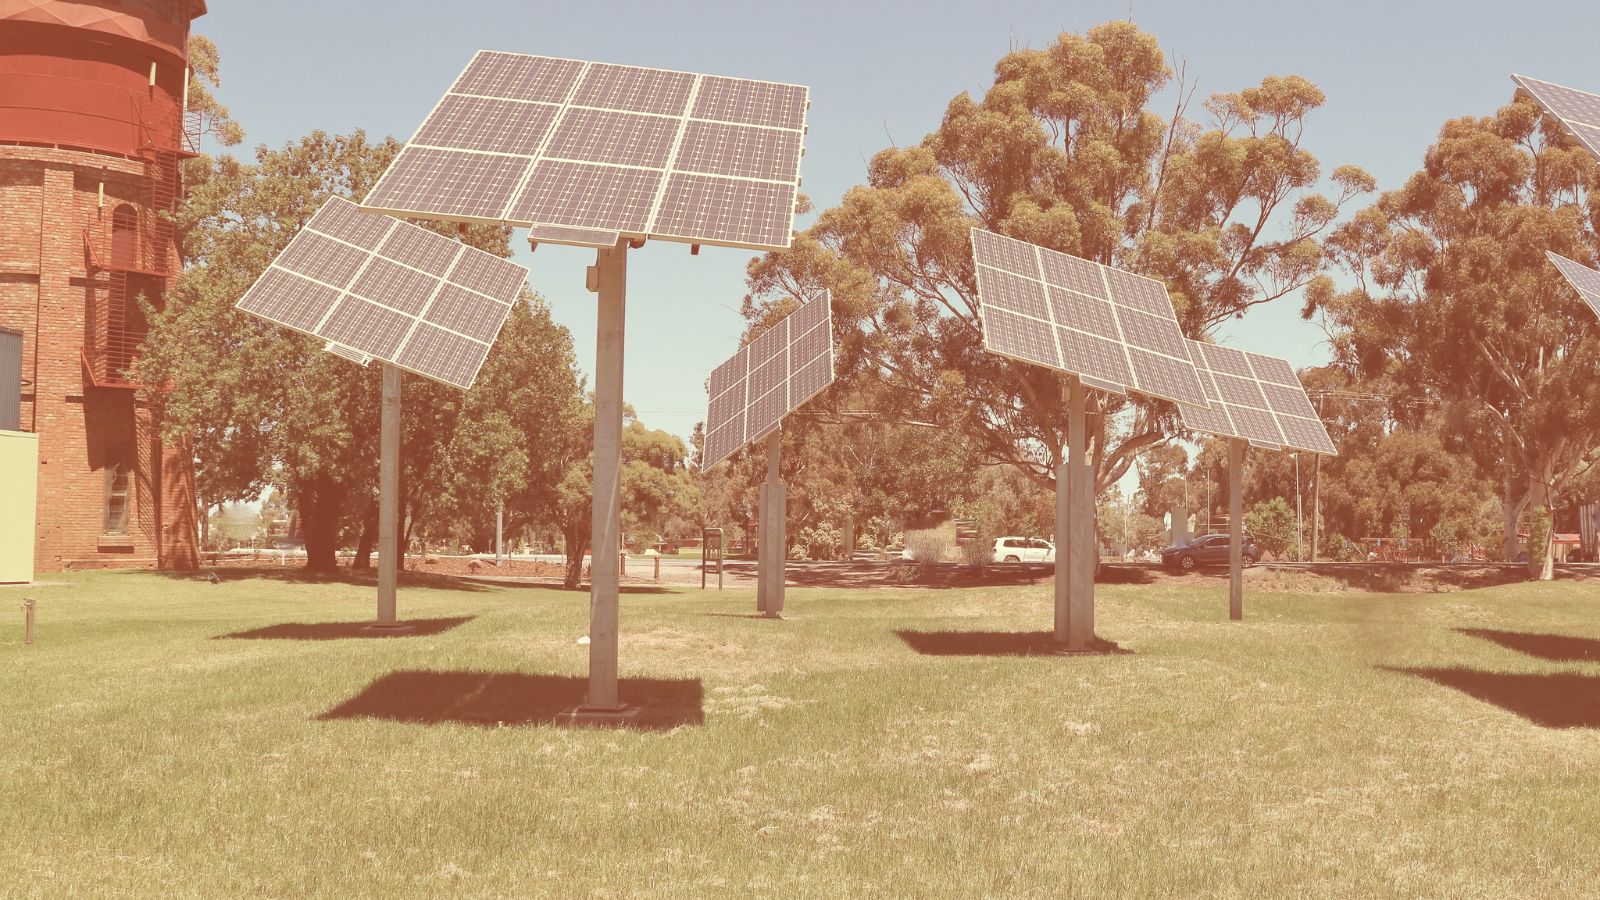 Community solar trees